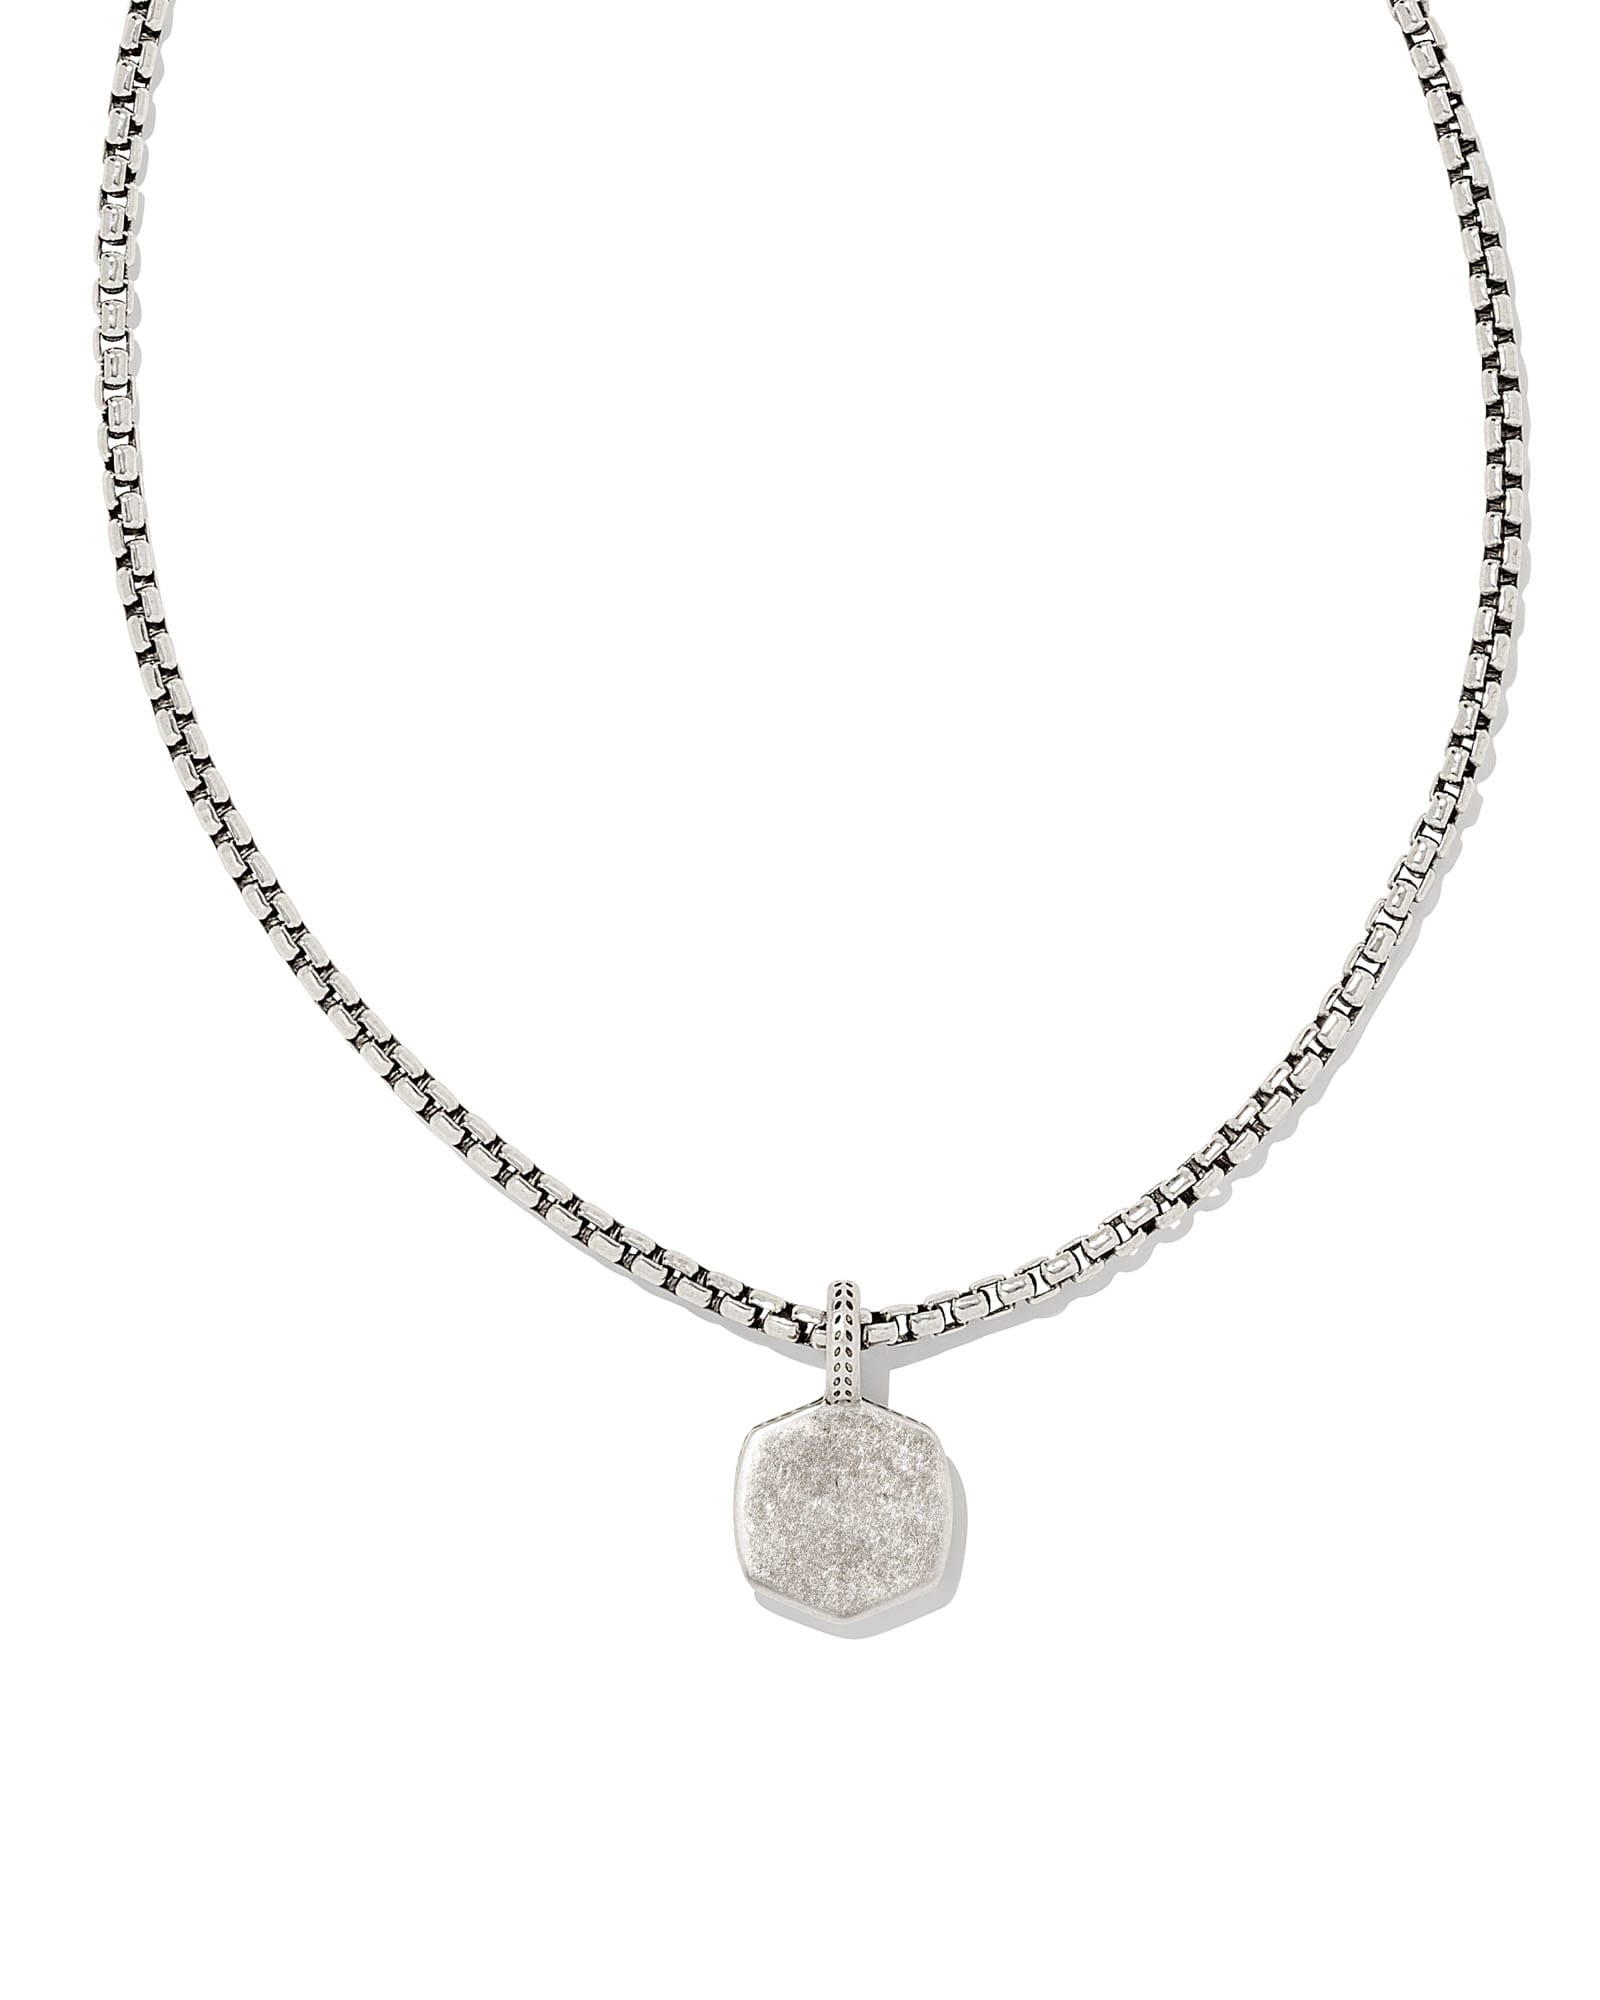 Kendra Scott Davie Metal Charm Necklace in Oxidized Sterling Silver | Sterling Silver/Metal